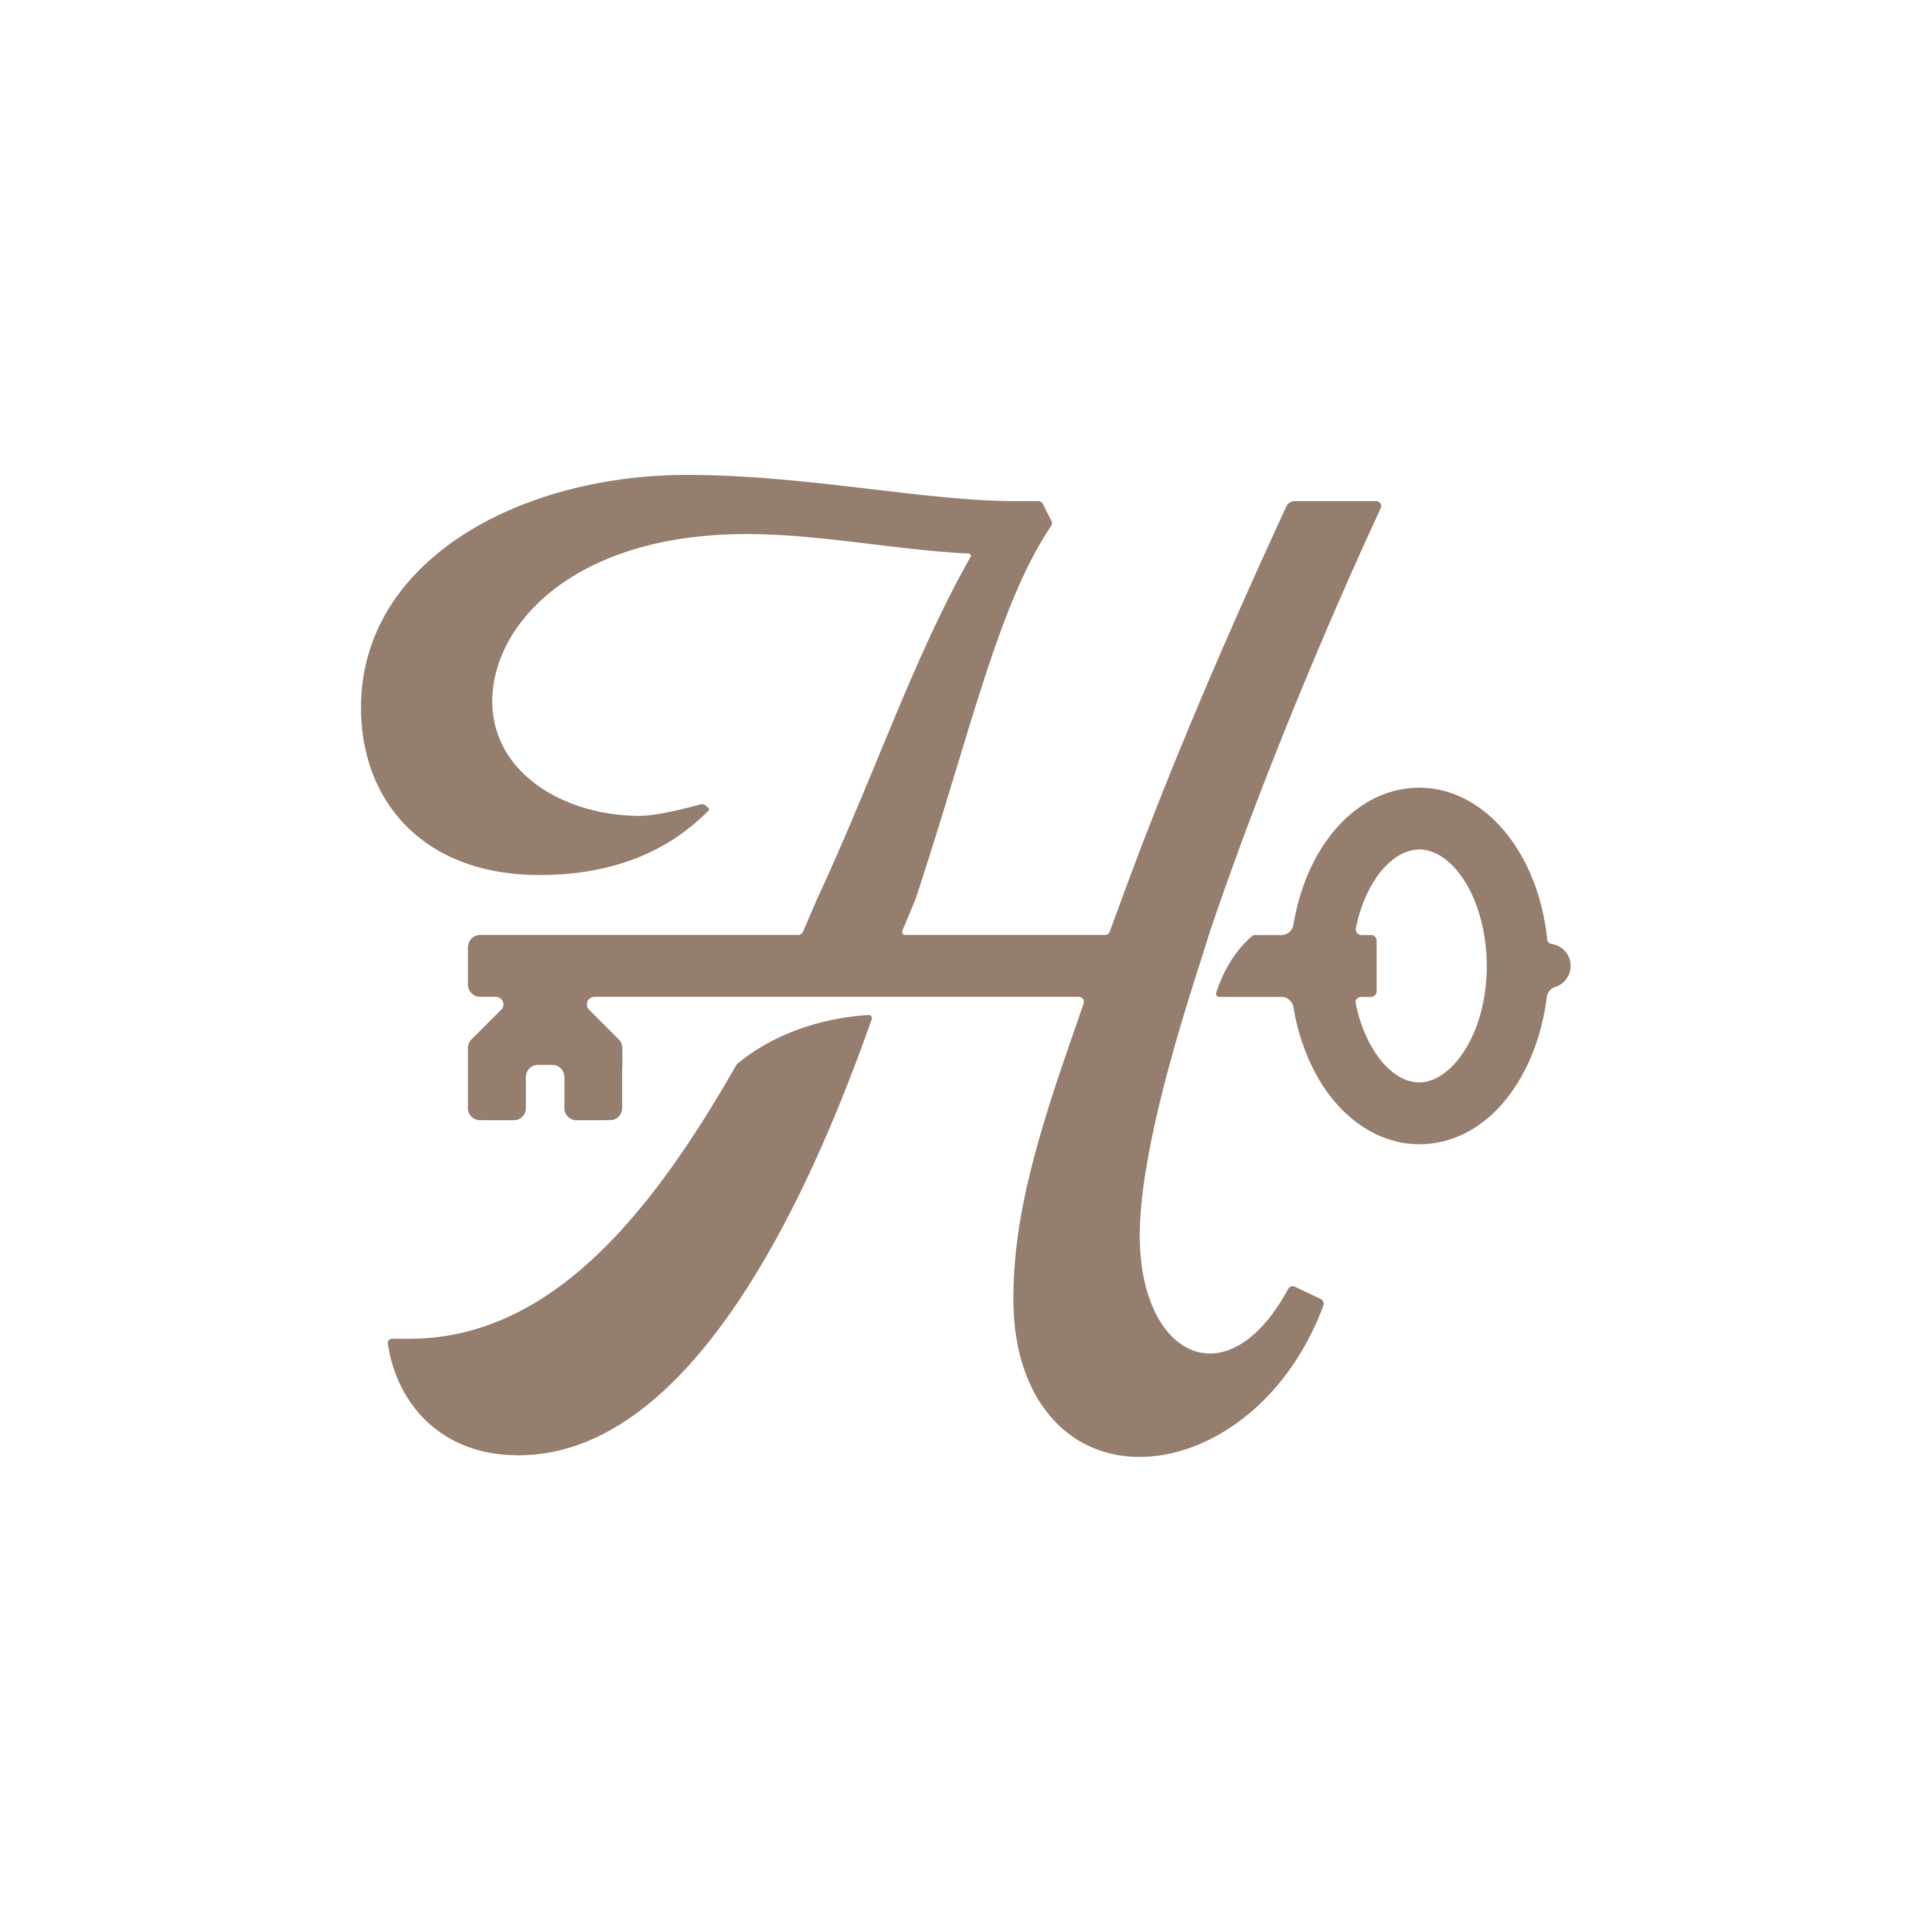 Hunt Real Estate - H logo design by logo designer Wandel Design for your inspiration and for the worlds largest logo competition